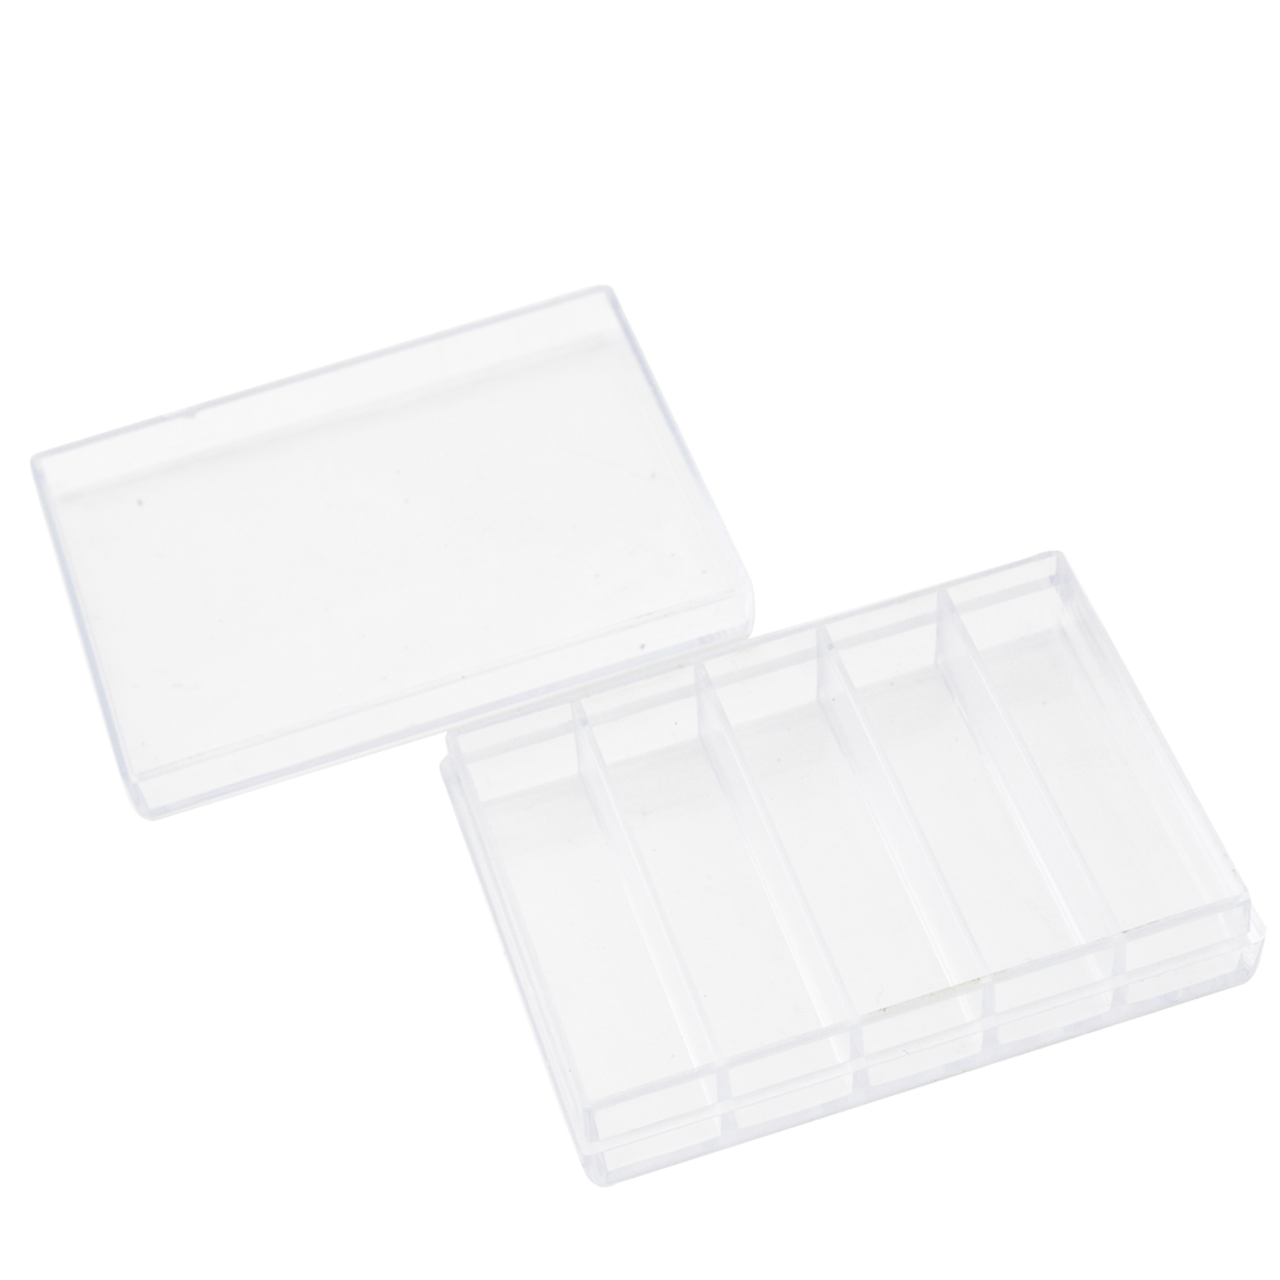 Small Thin Empty Plastic Assortment Box with Five Compartments | Esslinger